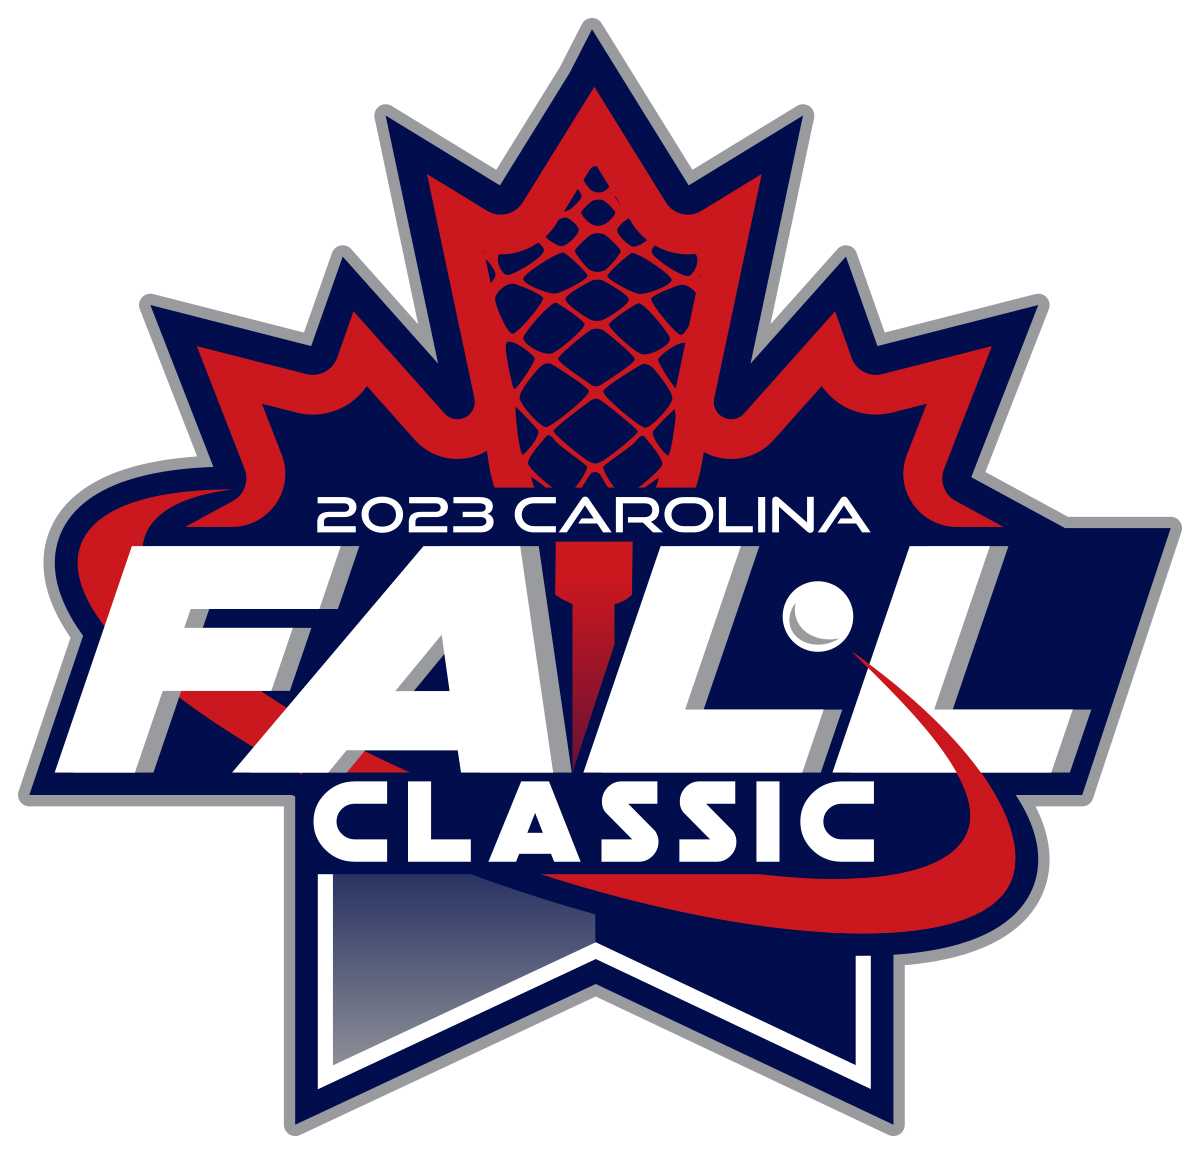 2023 Carolina Fall Classic logo